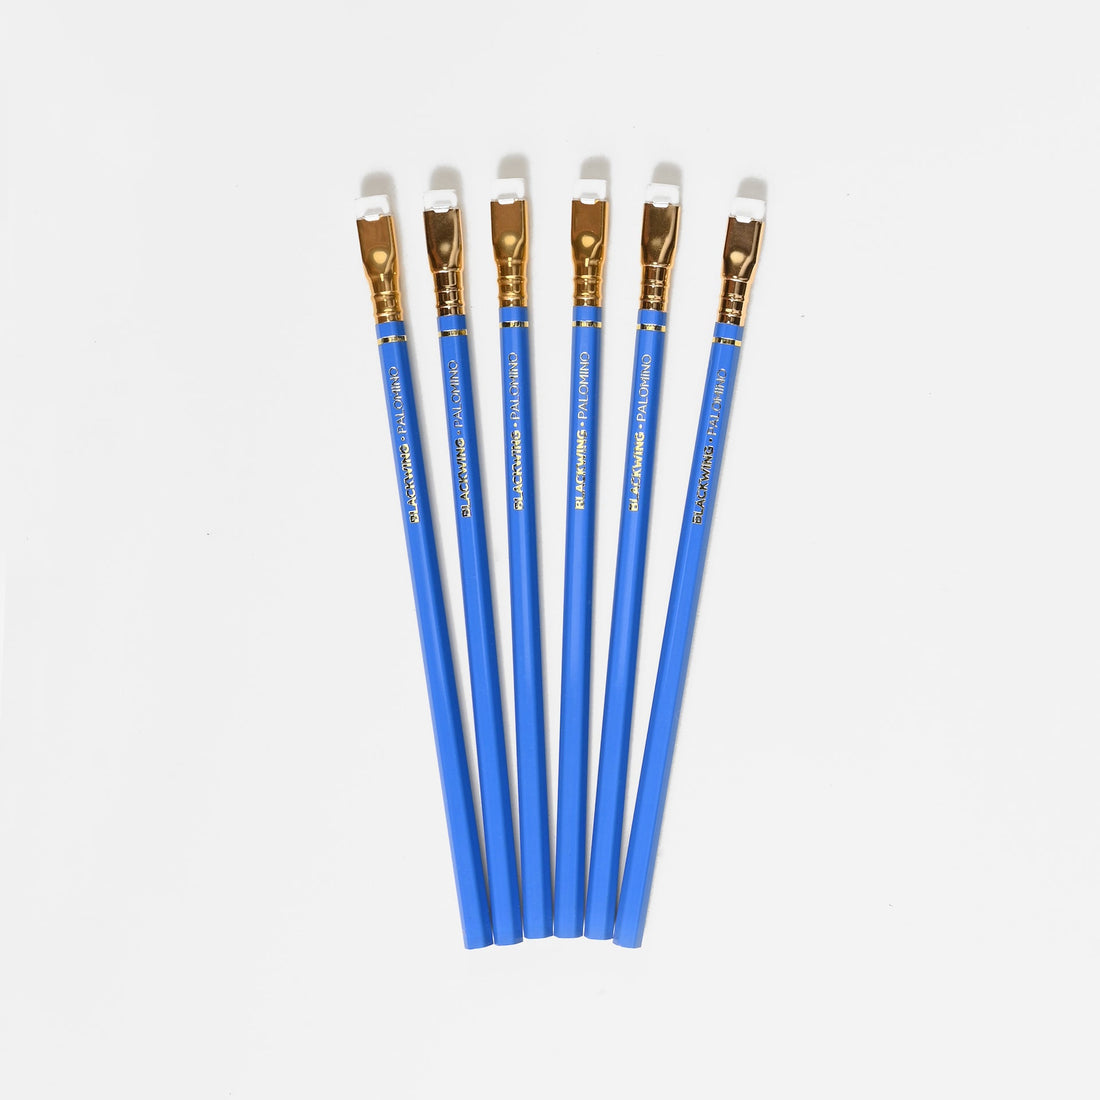 Blackwing Blackwing Eras Palomino Blue Pencils Box of Twelve Limited Edition 